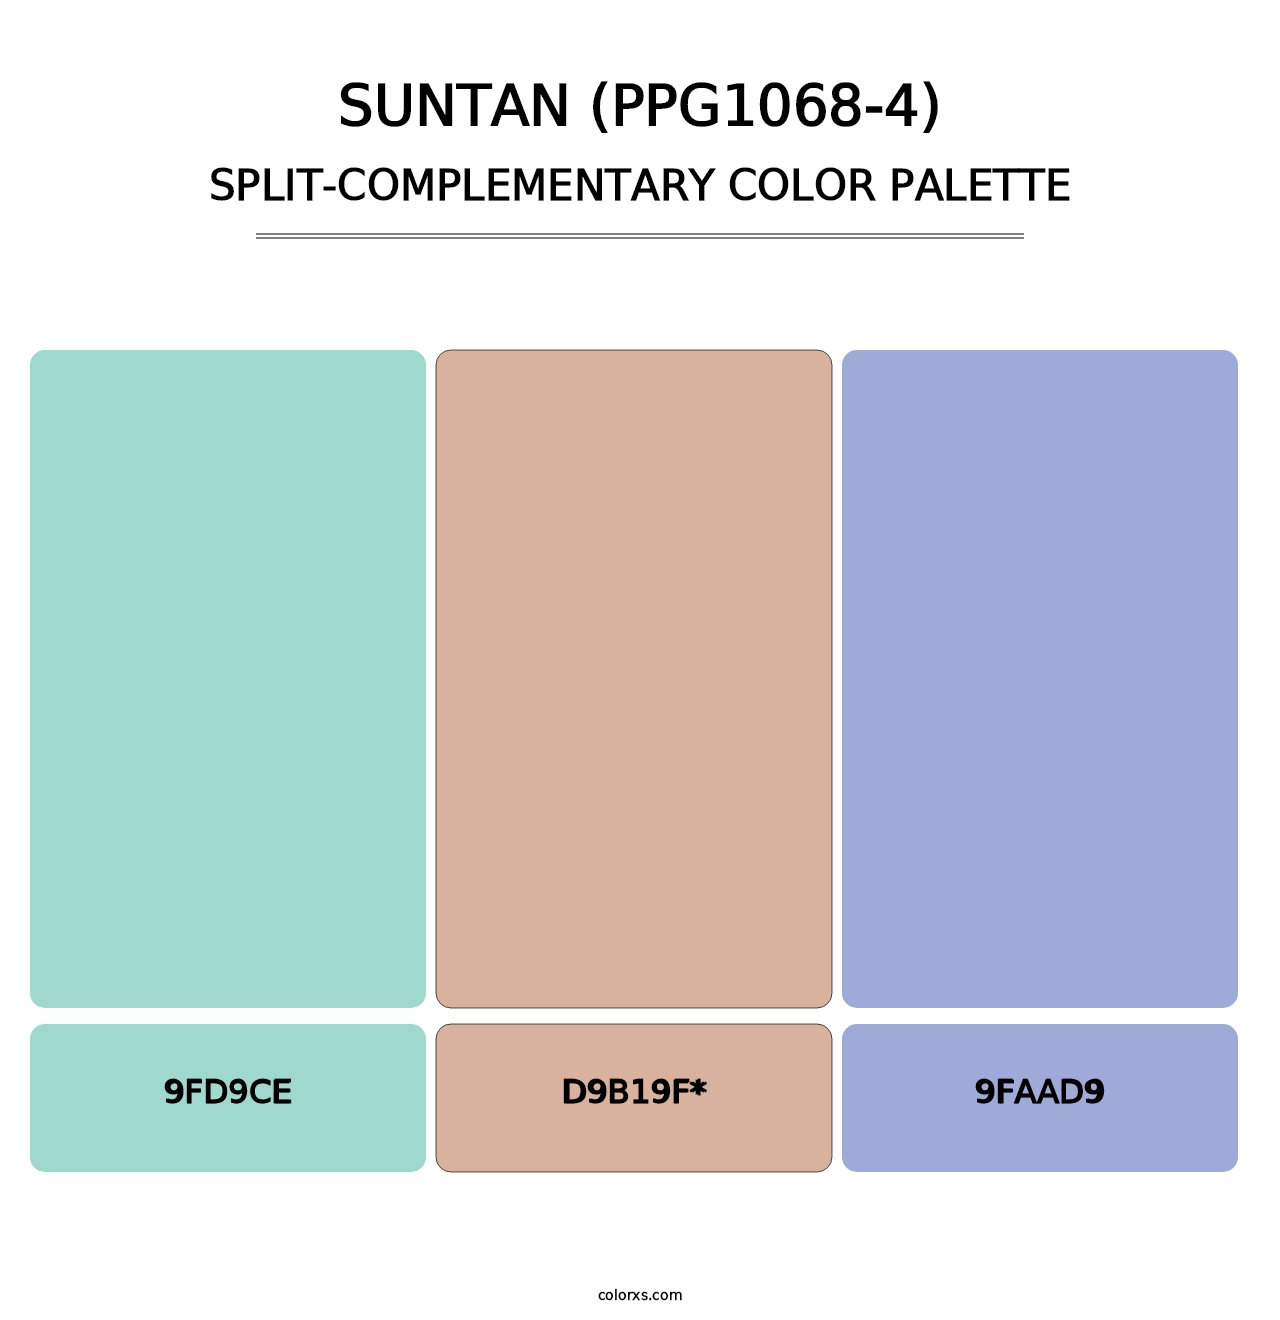 Suntan (PPG1068-4) - Split-Complementary Color Palette